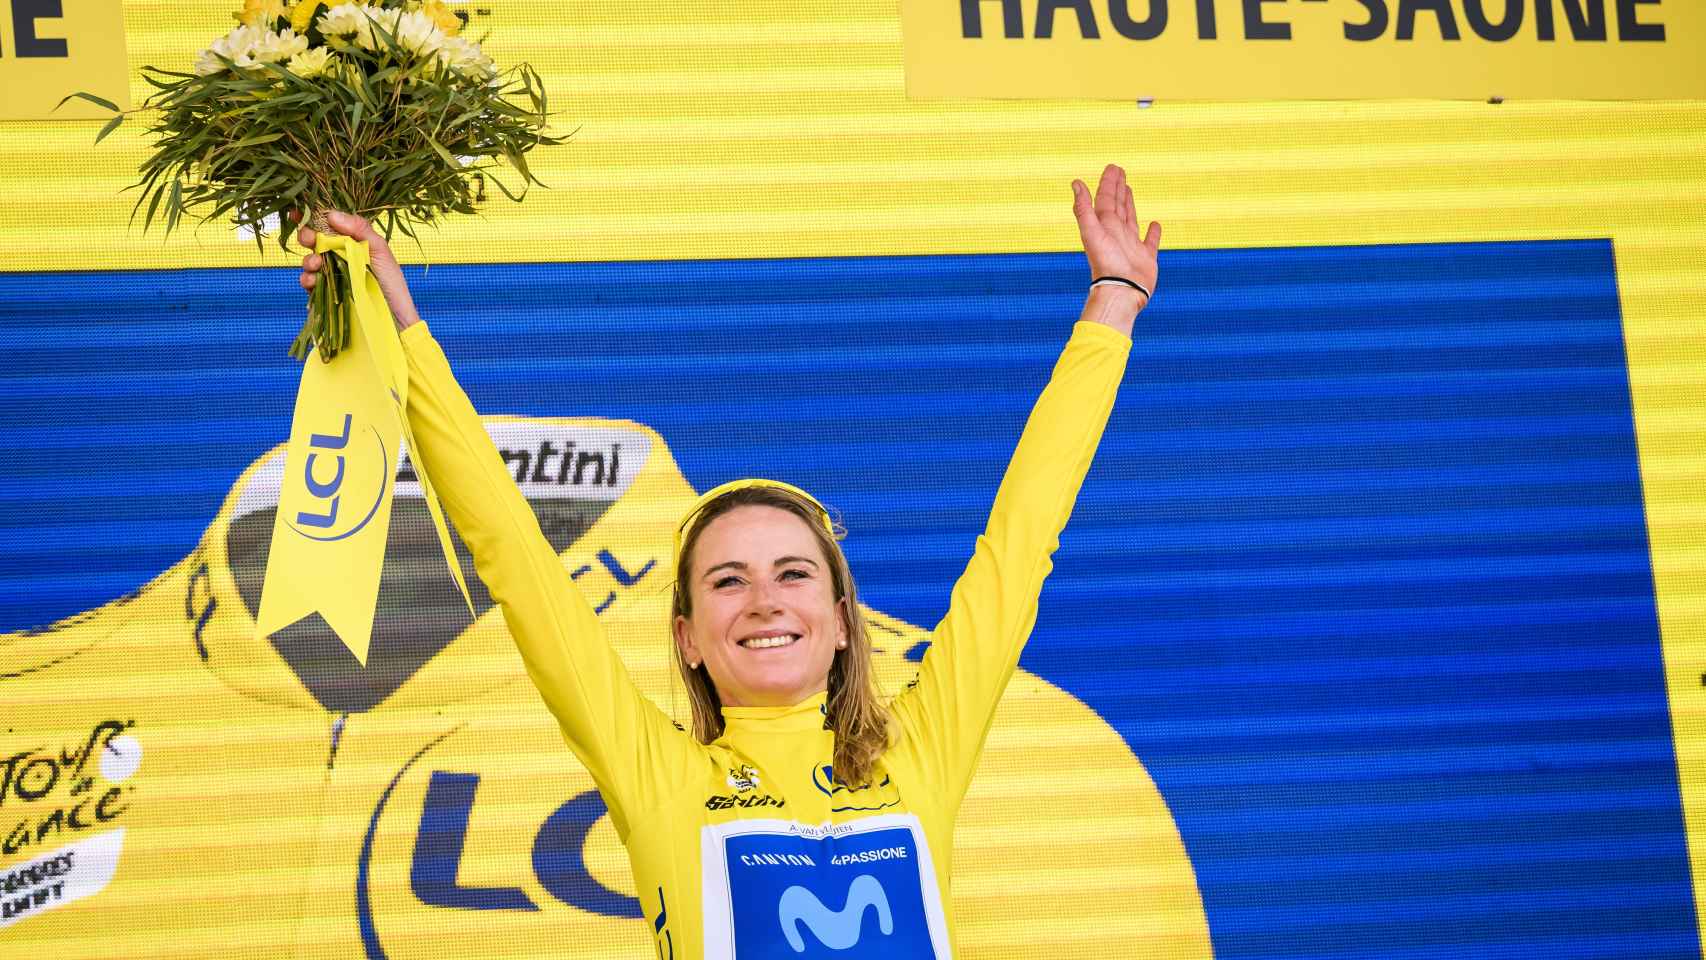 Annemiek Van Vleuten en lo más alto del podio del Tour de France Femmes.